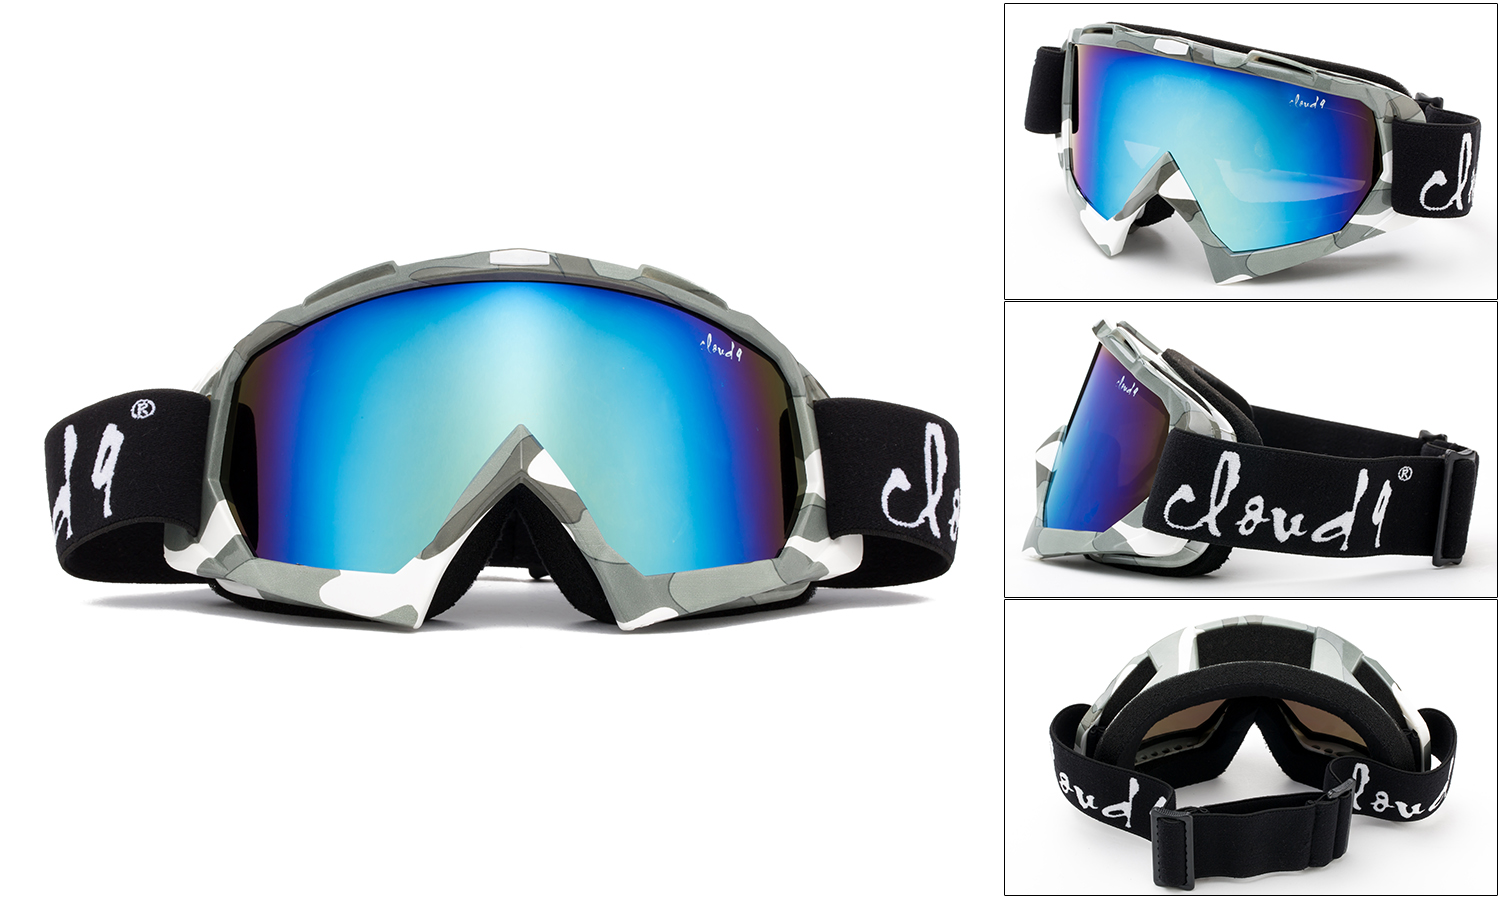 Cloud 9 - Snow Goggles "Gorilla" Adult Camo Anti-Fog Dual Lens UV400 Snowboarding Ski - image 2 of 4